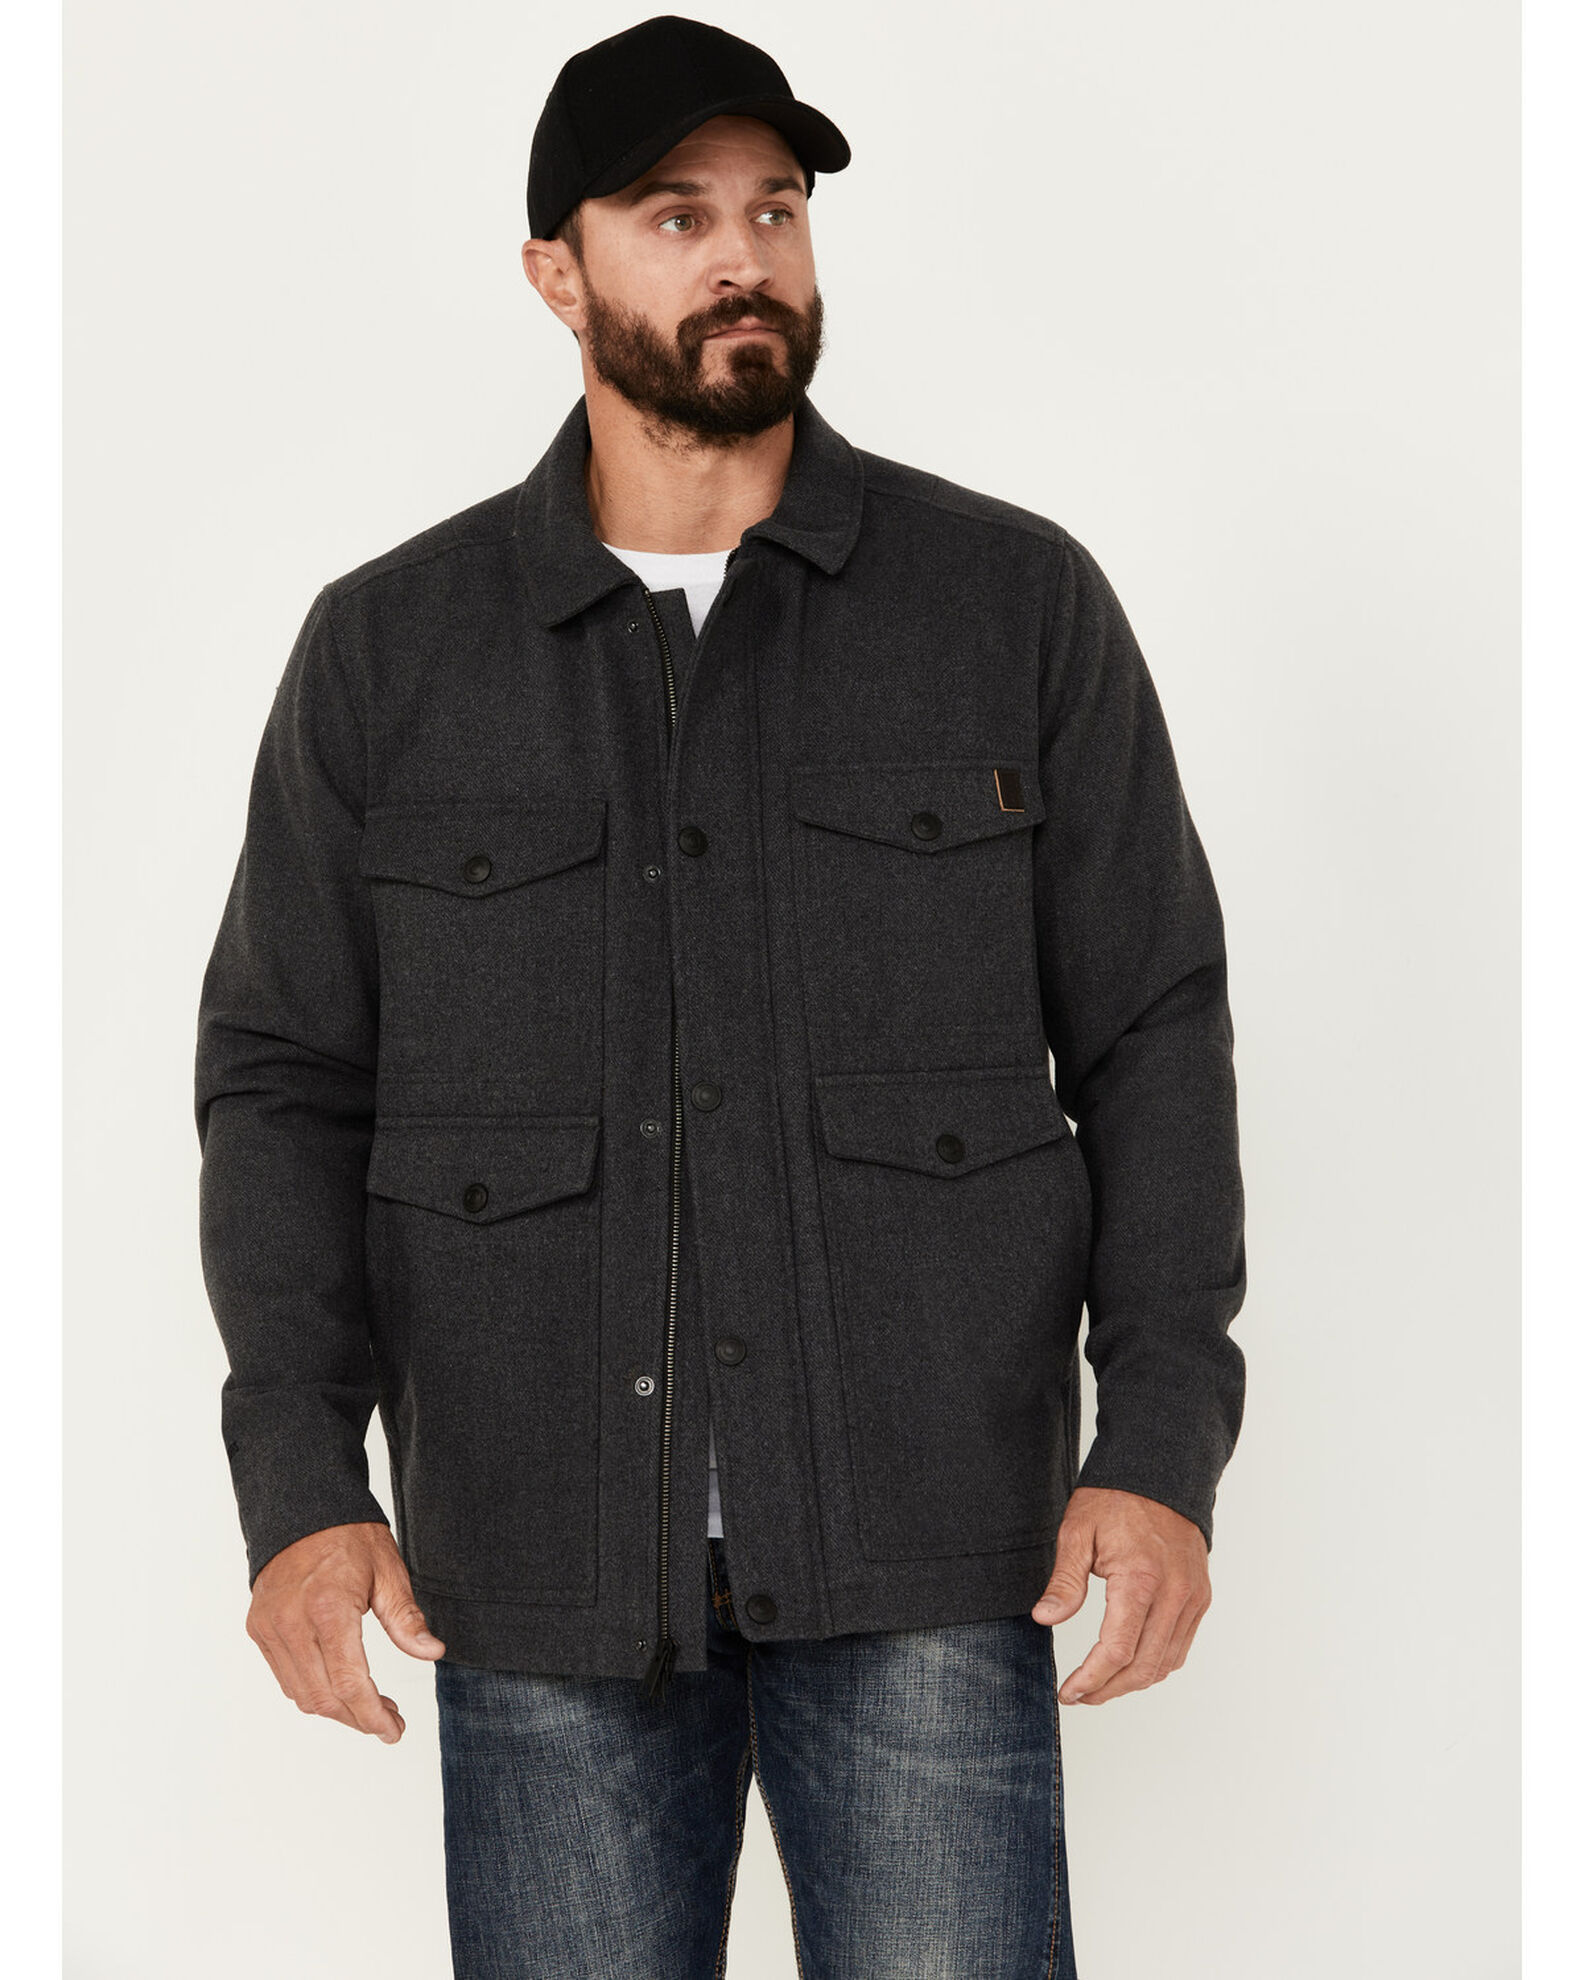 Brothers & Sons Men's Crockett Wool Flannel Lined Snap Jacket